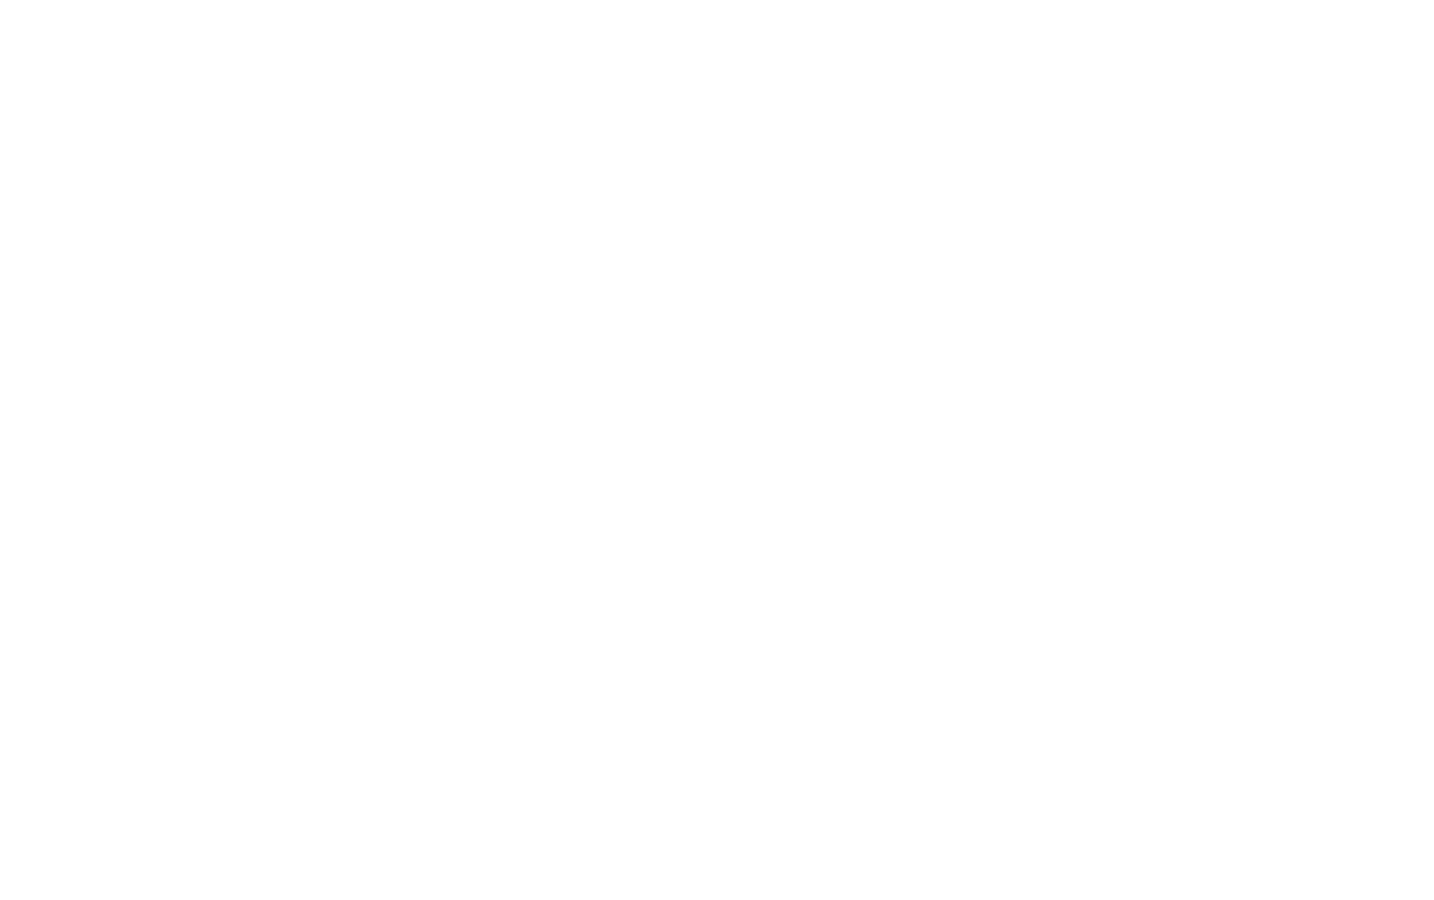 Clubs Logo - Home League Boys & Girls Clubs